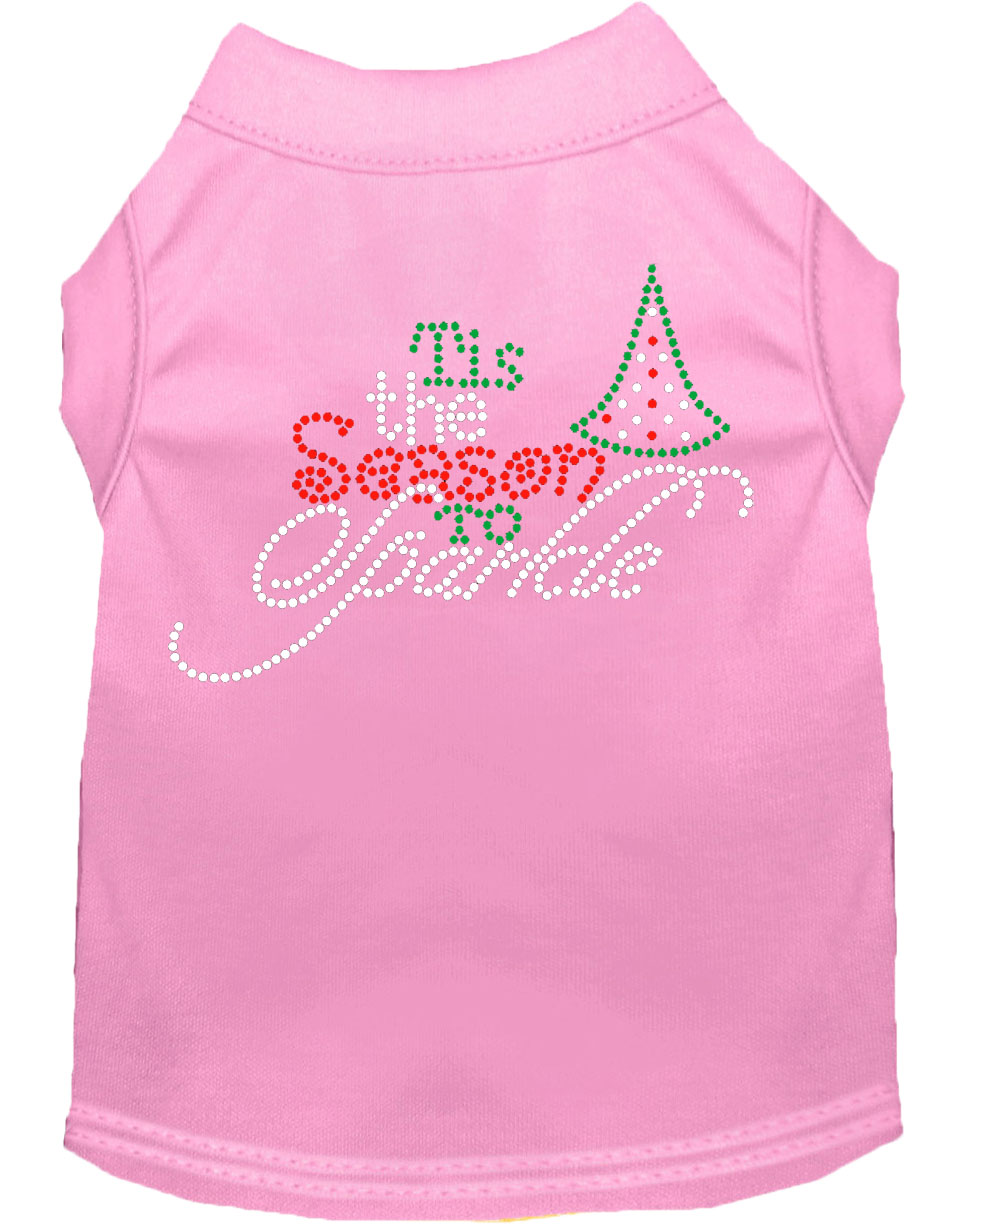 Tis the Season to Sparkle Rhinestone Dog Shirt Light Pink XL